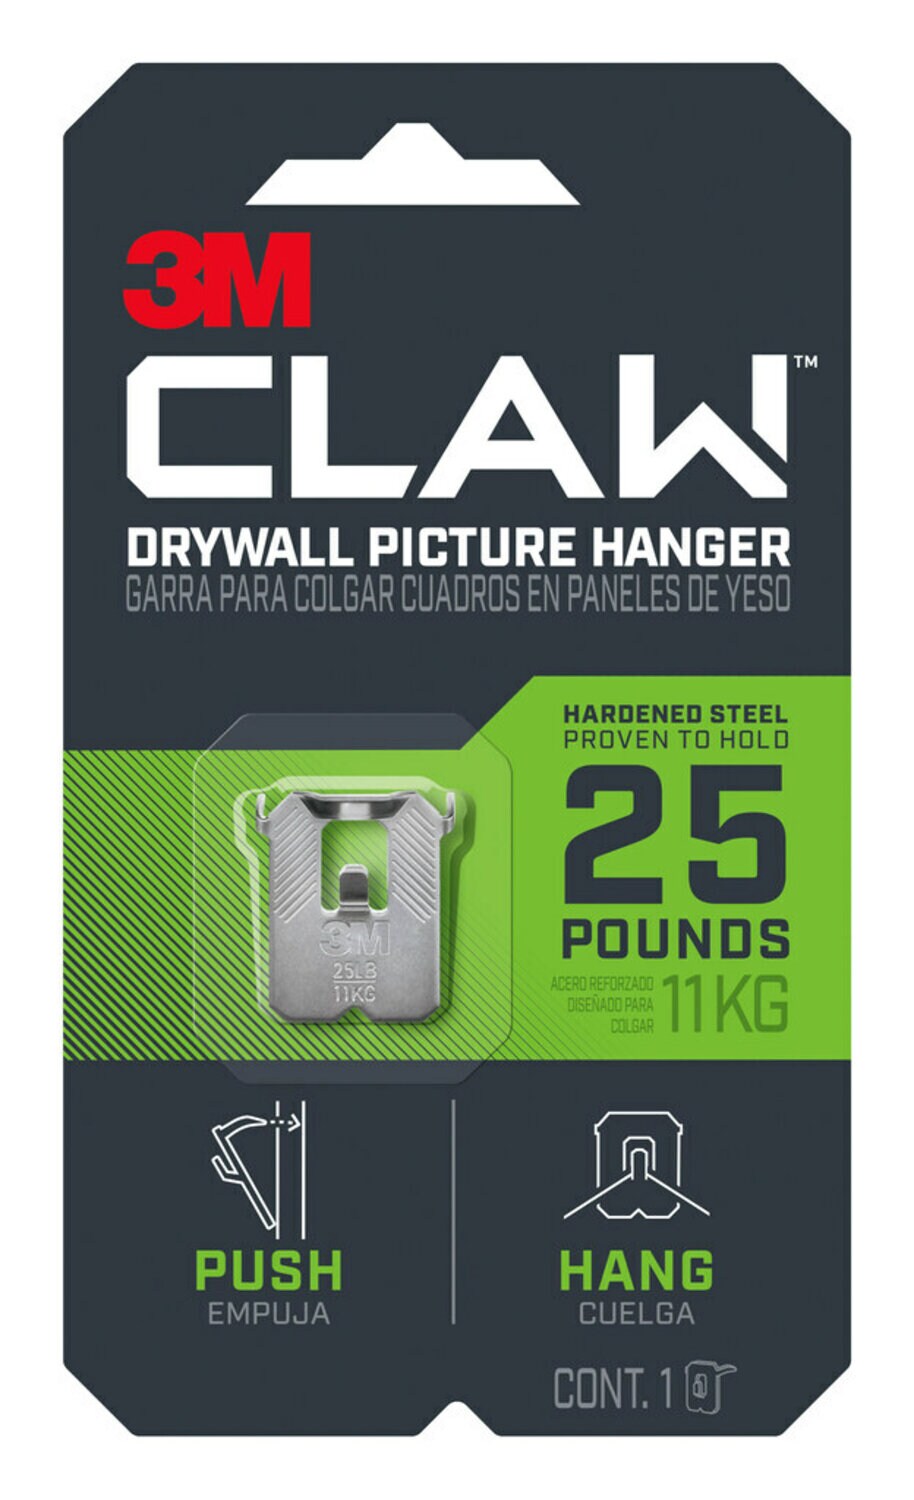 7100220652 - 3M CLAW Drywall Picture Hanger 25 lb 3PH25-1ES-ALT, 1 hanger